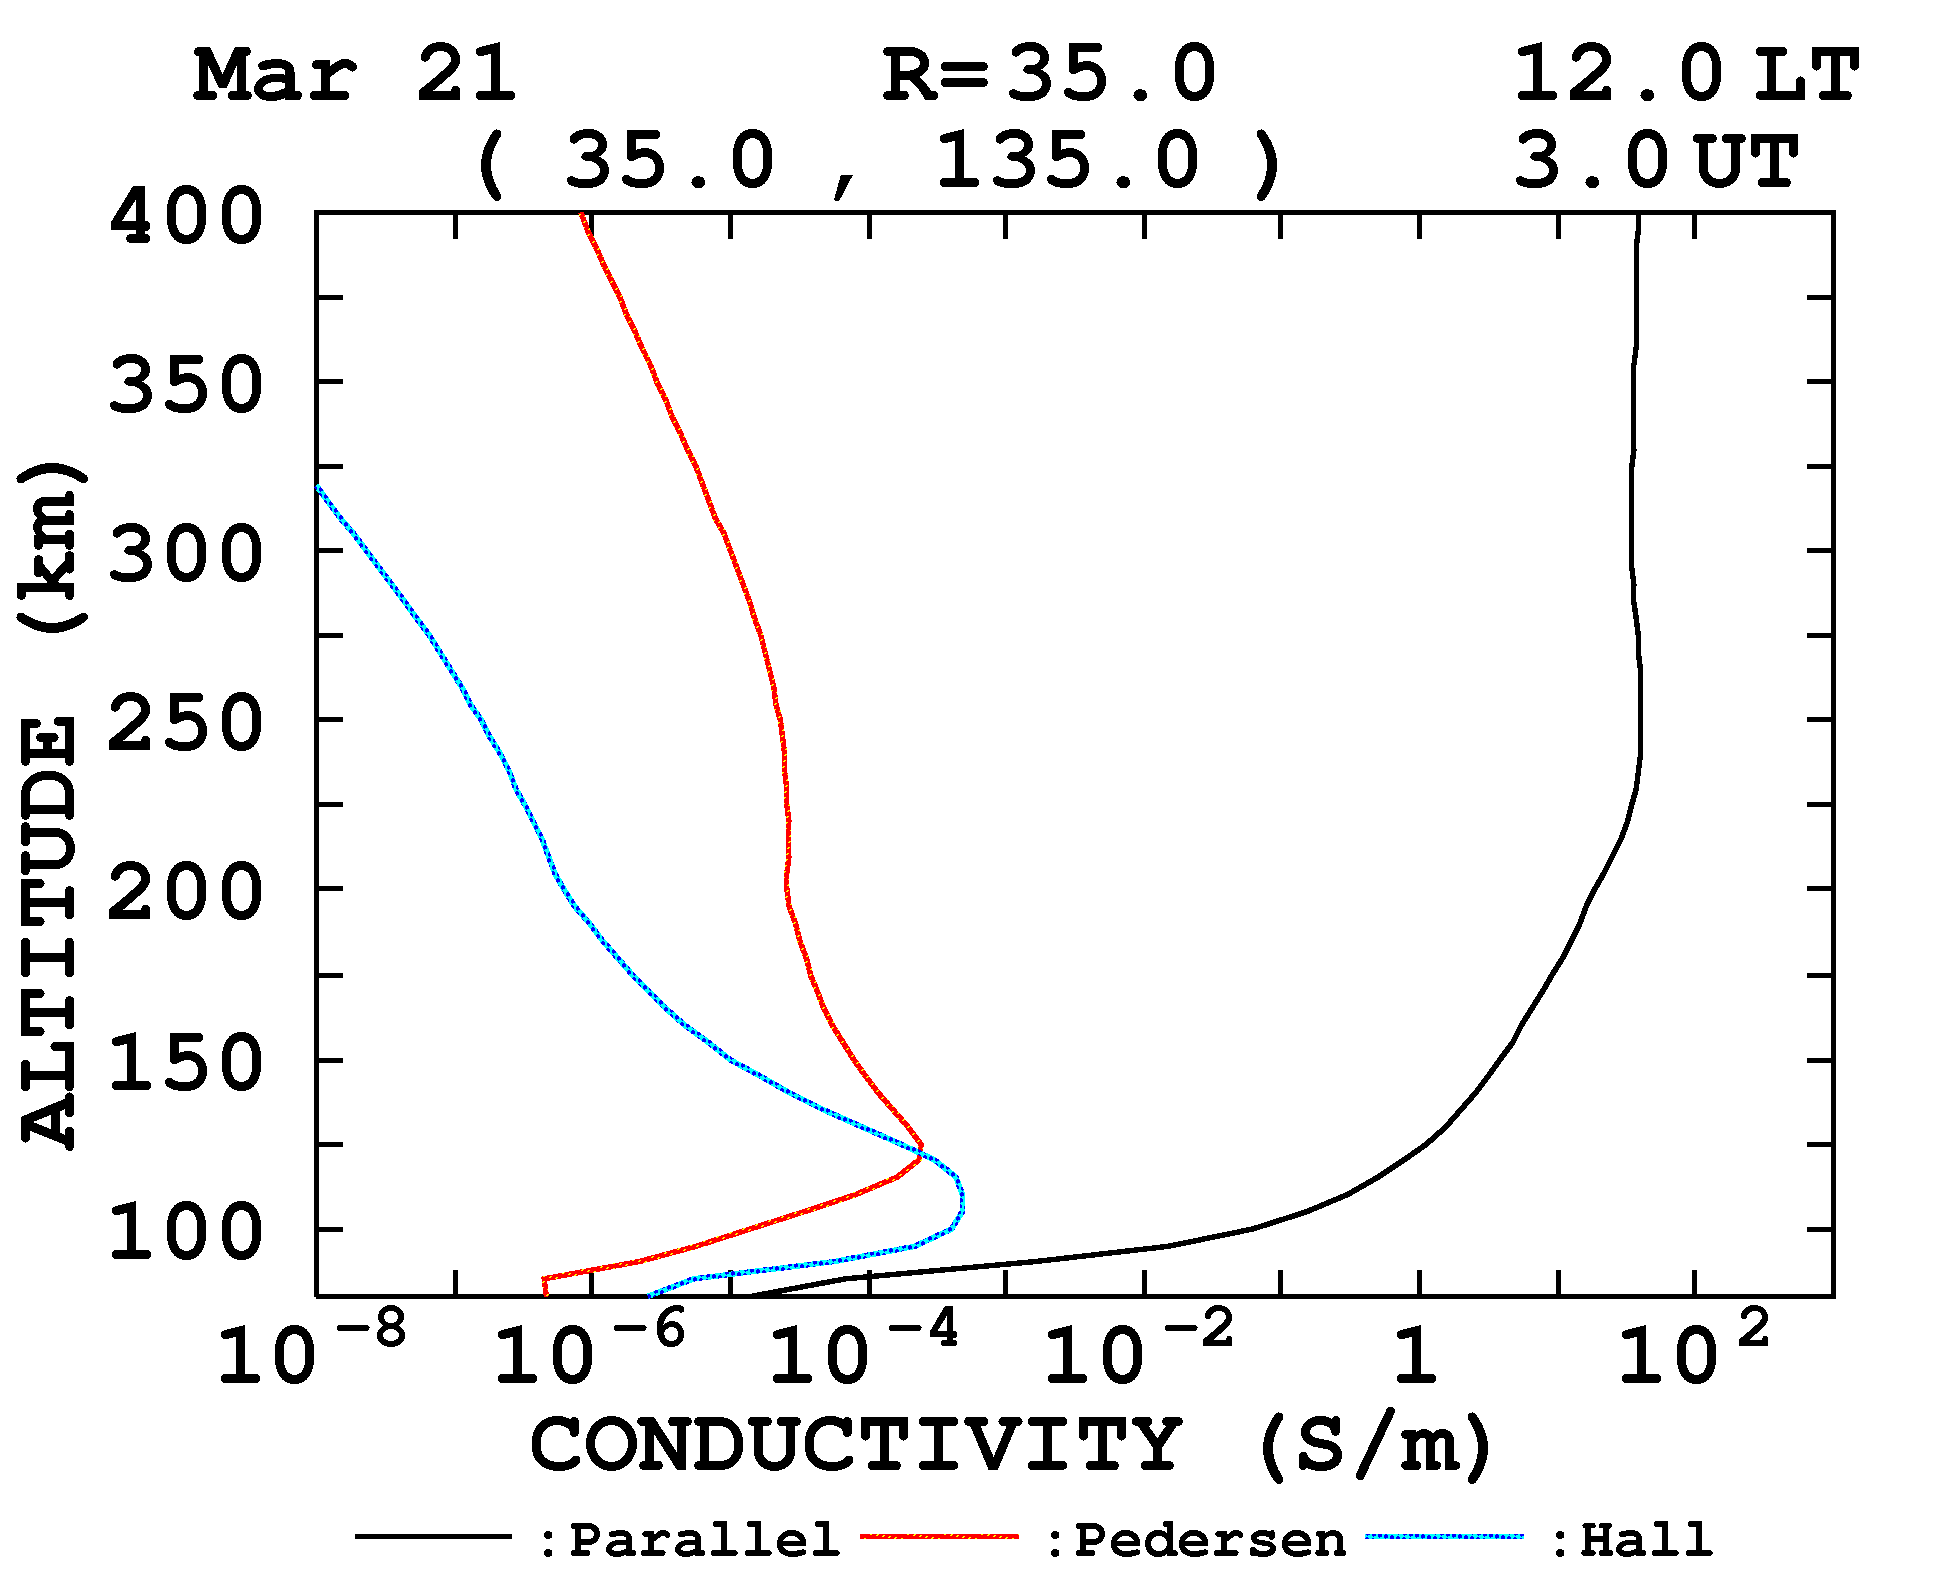 Height profile of the
ionospheric conductivity